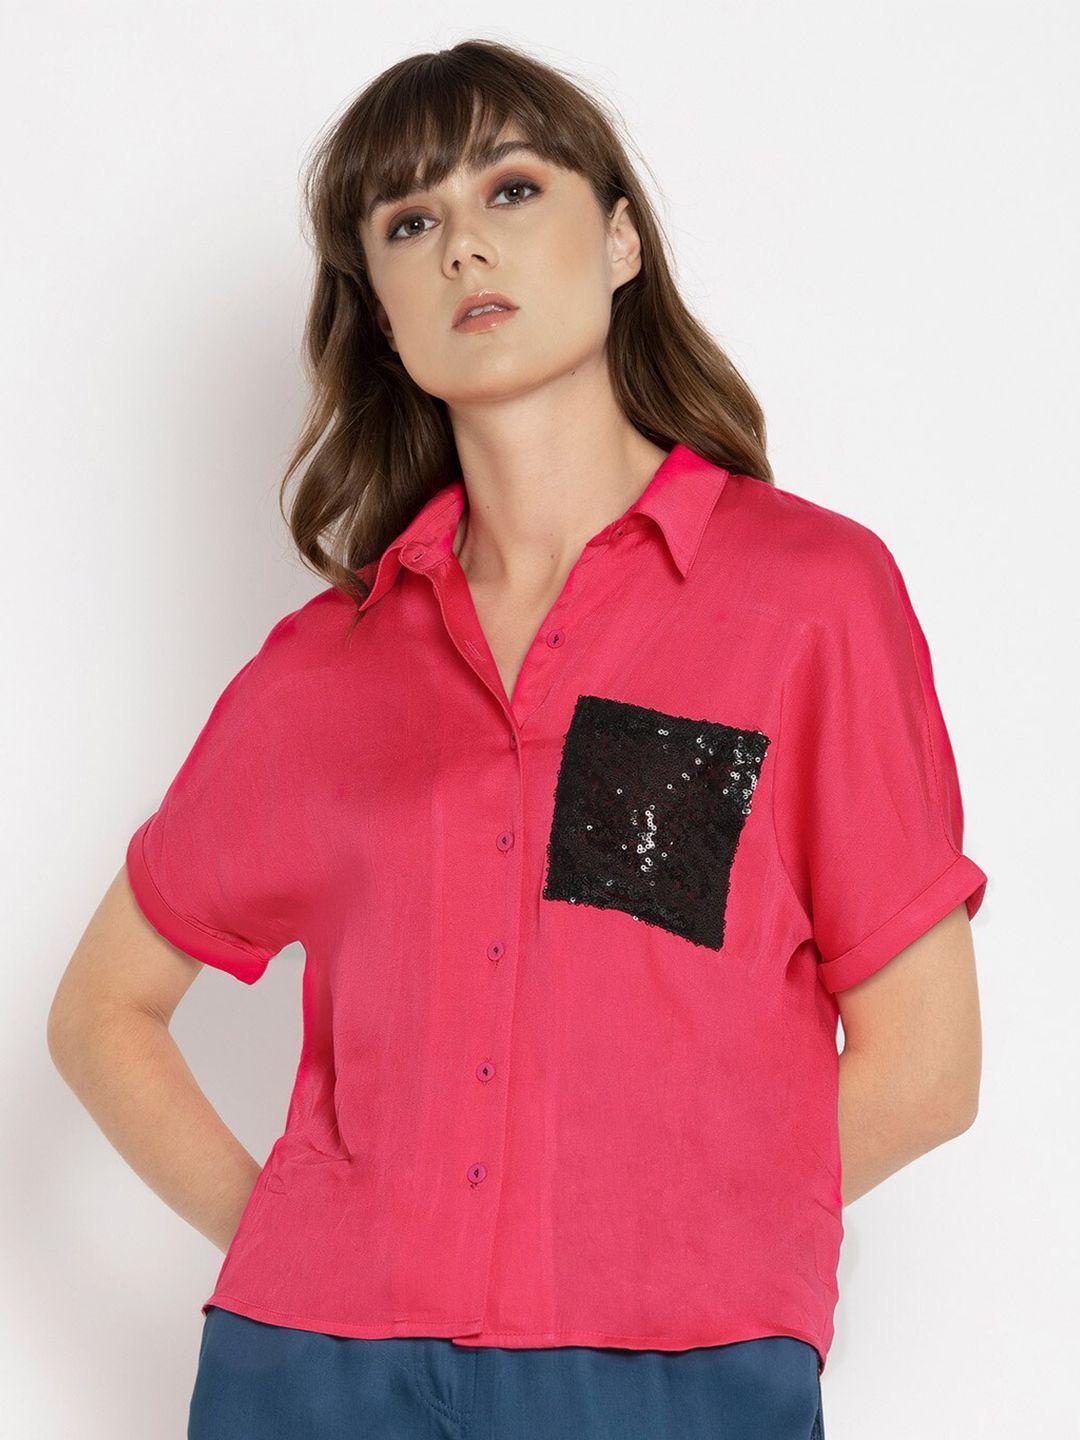 shaye women fuchsia pink extended sleeves casual shirt